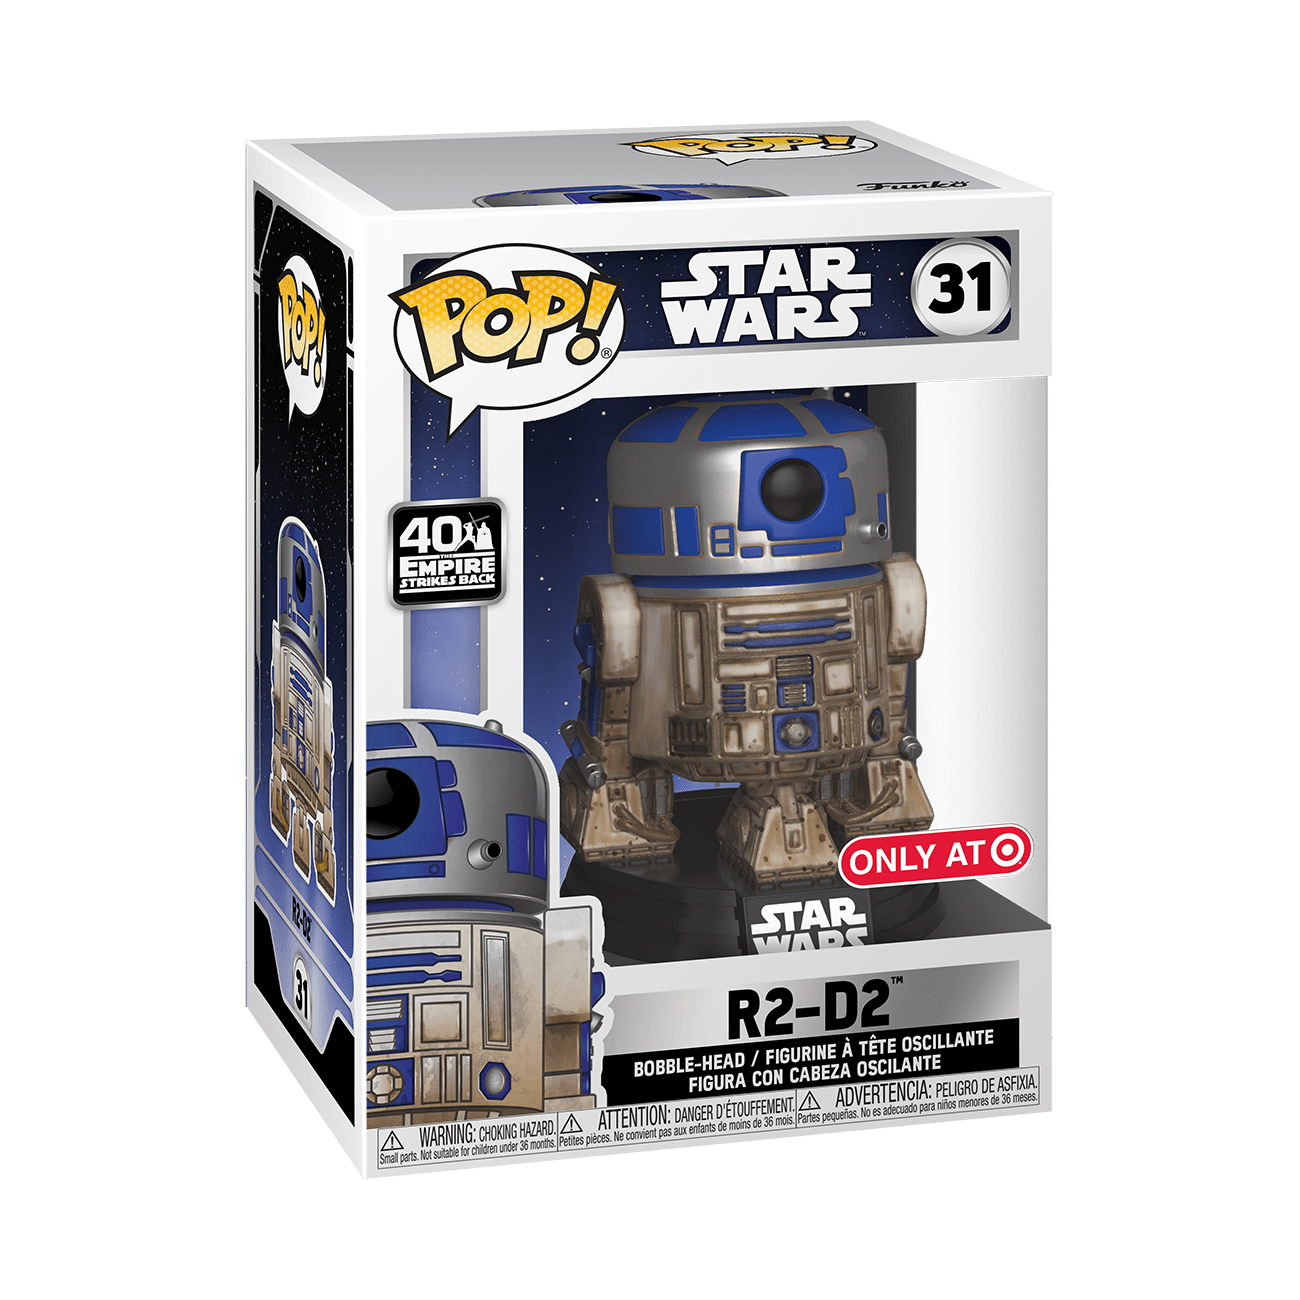 POP! Star Wars: 31 SW (E5), R2-D2 Exclusive